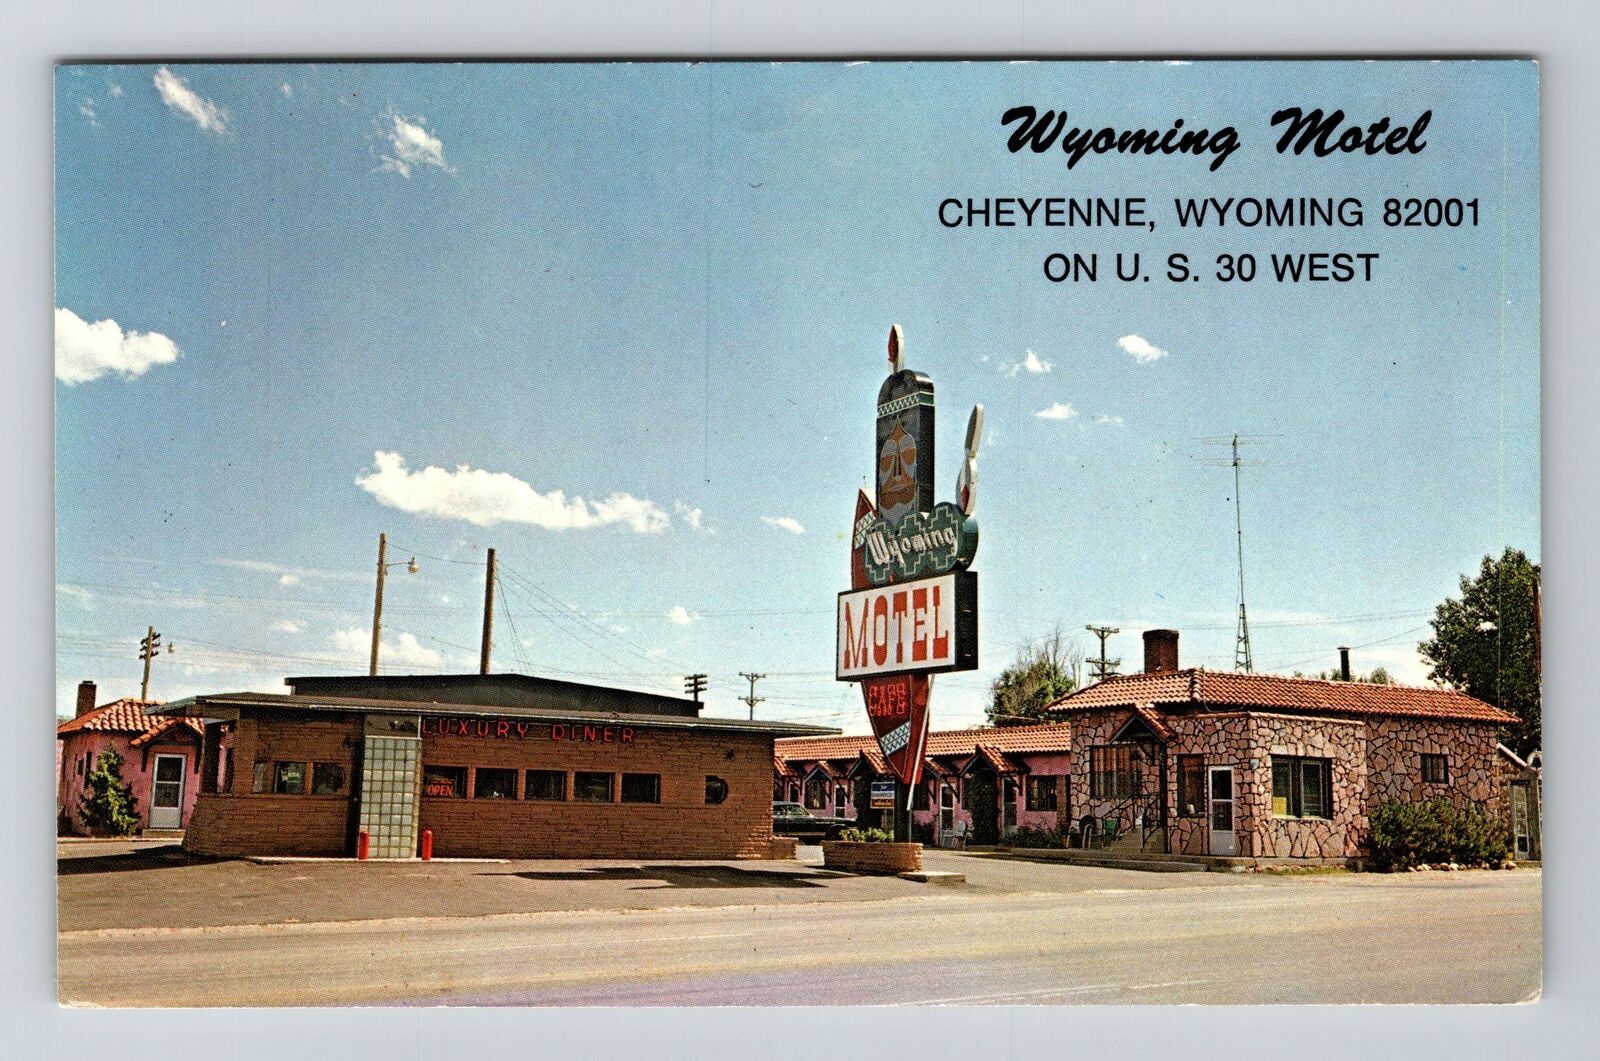 Cheyenne Wy-Wyoming Motel Diner Antique Vintage Souvenir Postcard